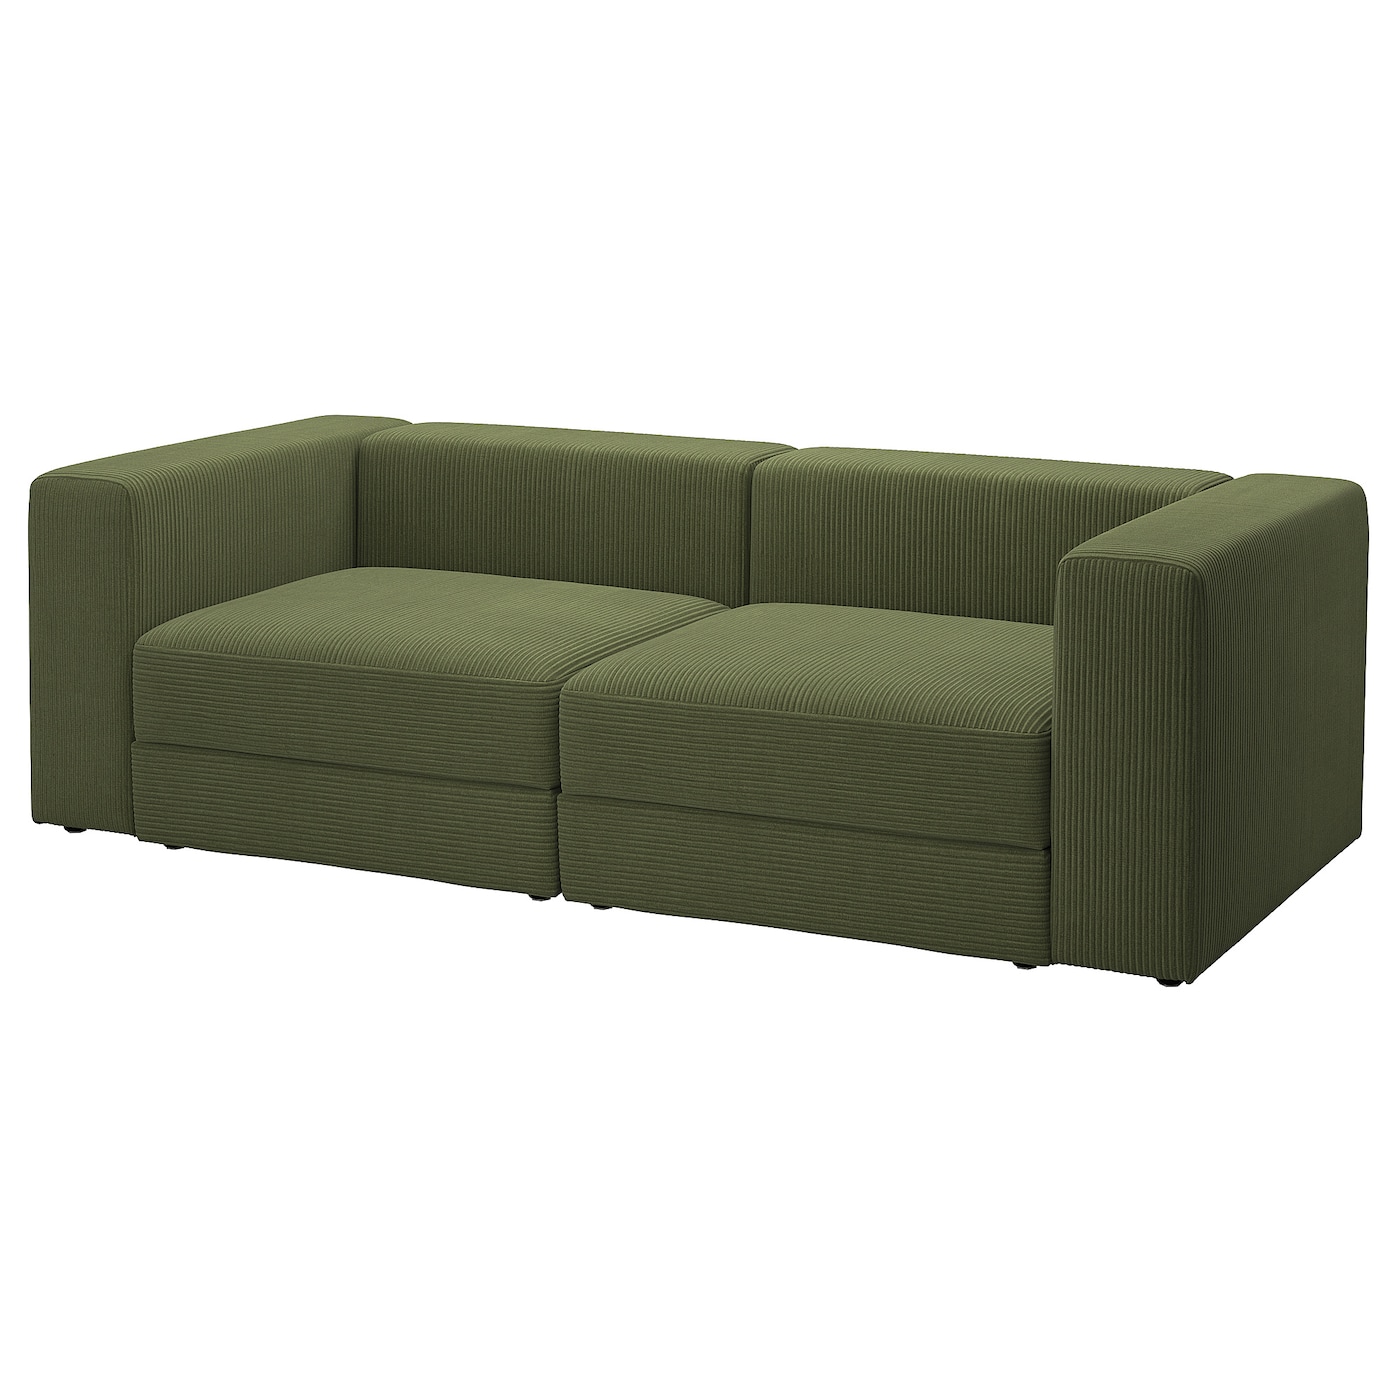 3-местный диван - IKEA JÄTTEBO/JATTEBO, 71x95x240cм, зеленый, ЙЕТТЕБО ИКЕА